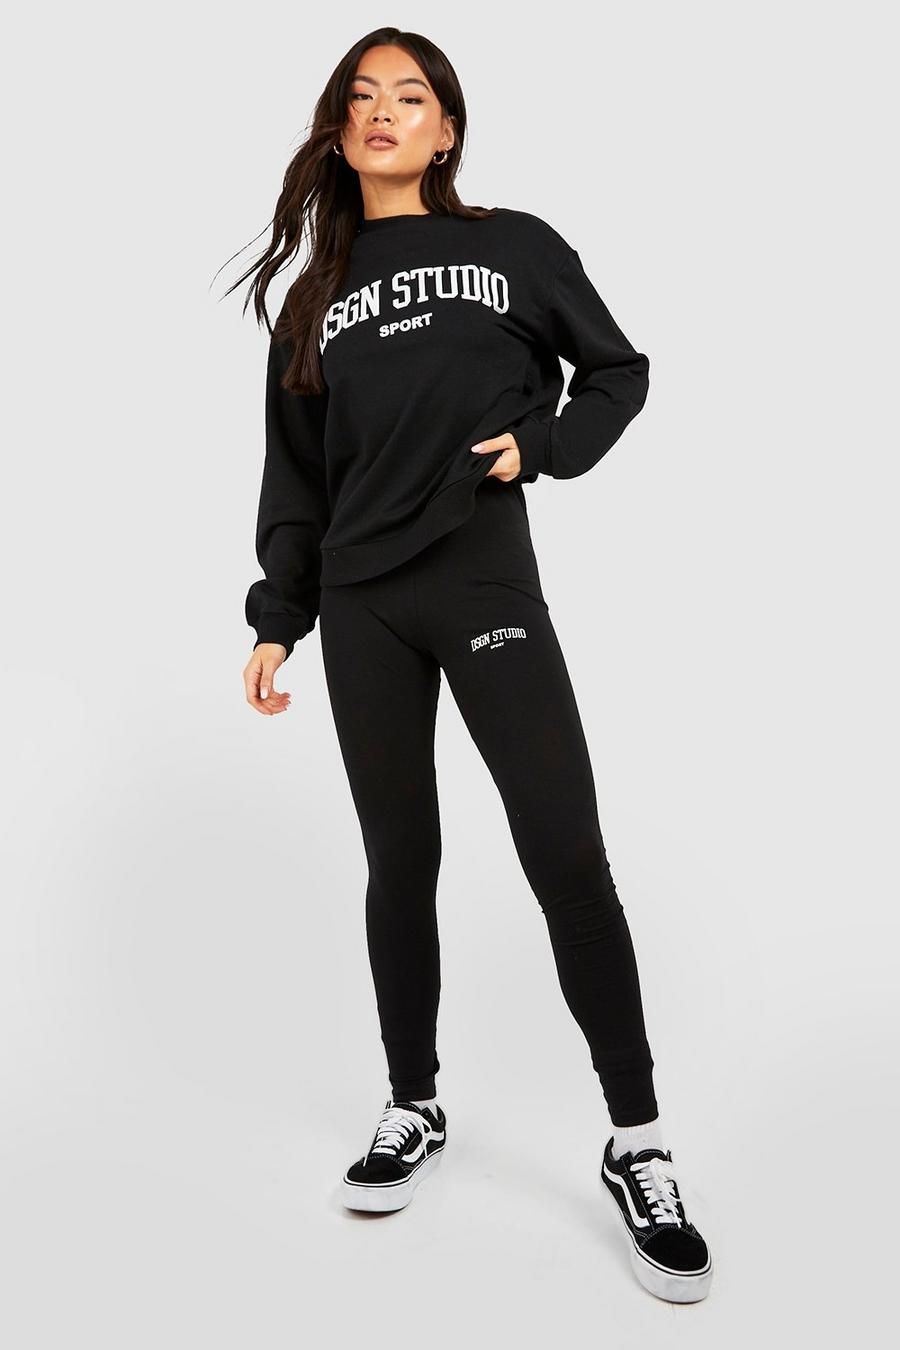 Black Dsgn Studio Sport Sweater Legging Tracksuit 